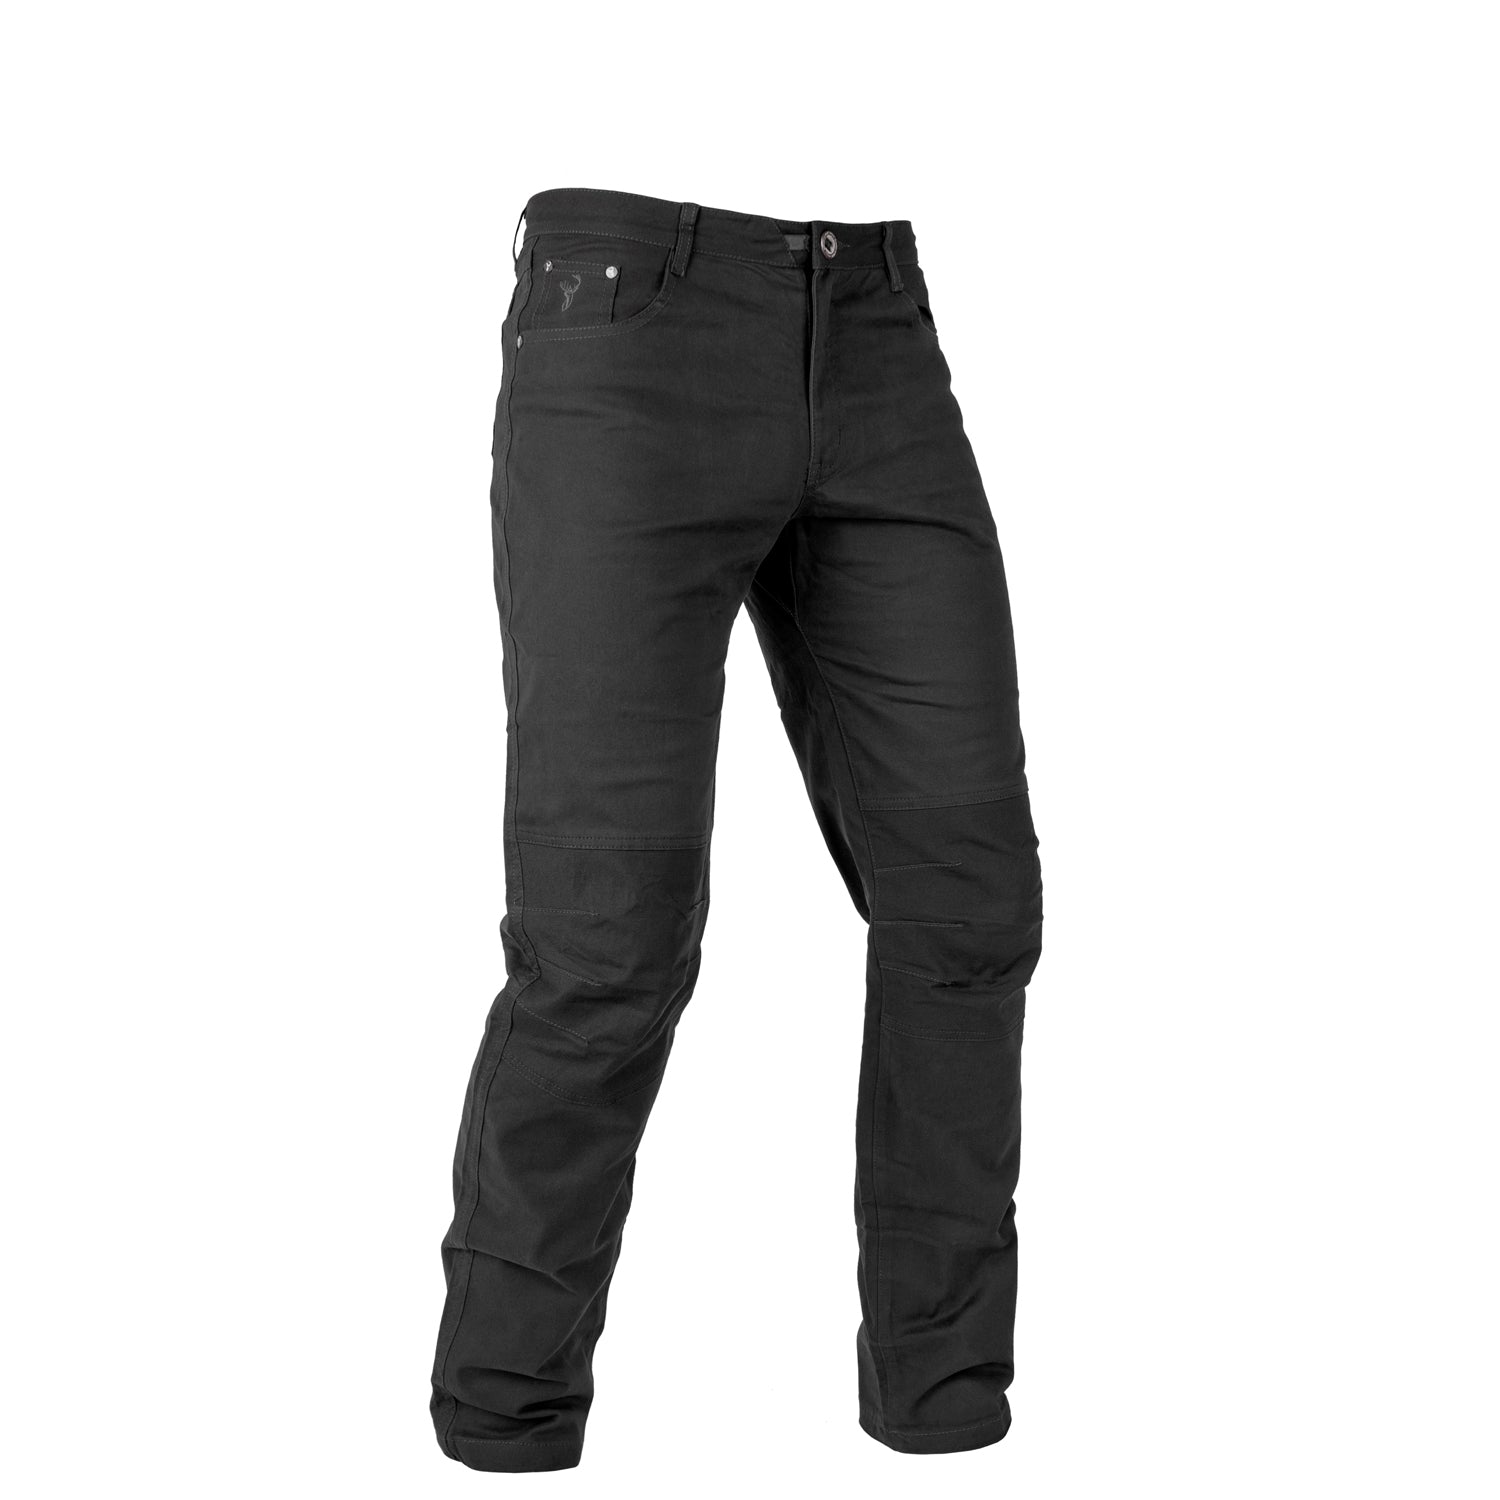 SCRUFFS 3D TRADE Trousers Hard Wearing CORDURA FABRIC Knee Pad Pockets  Trousers | eBay